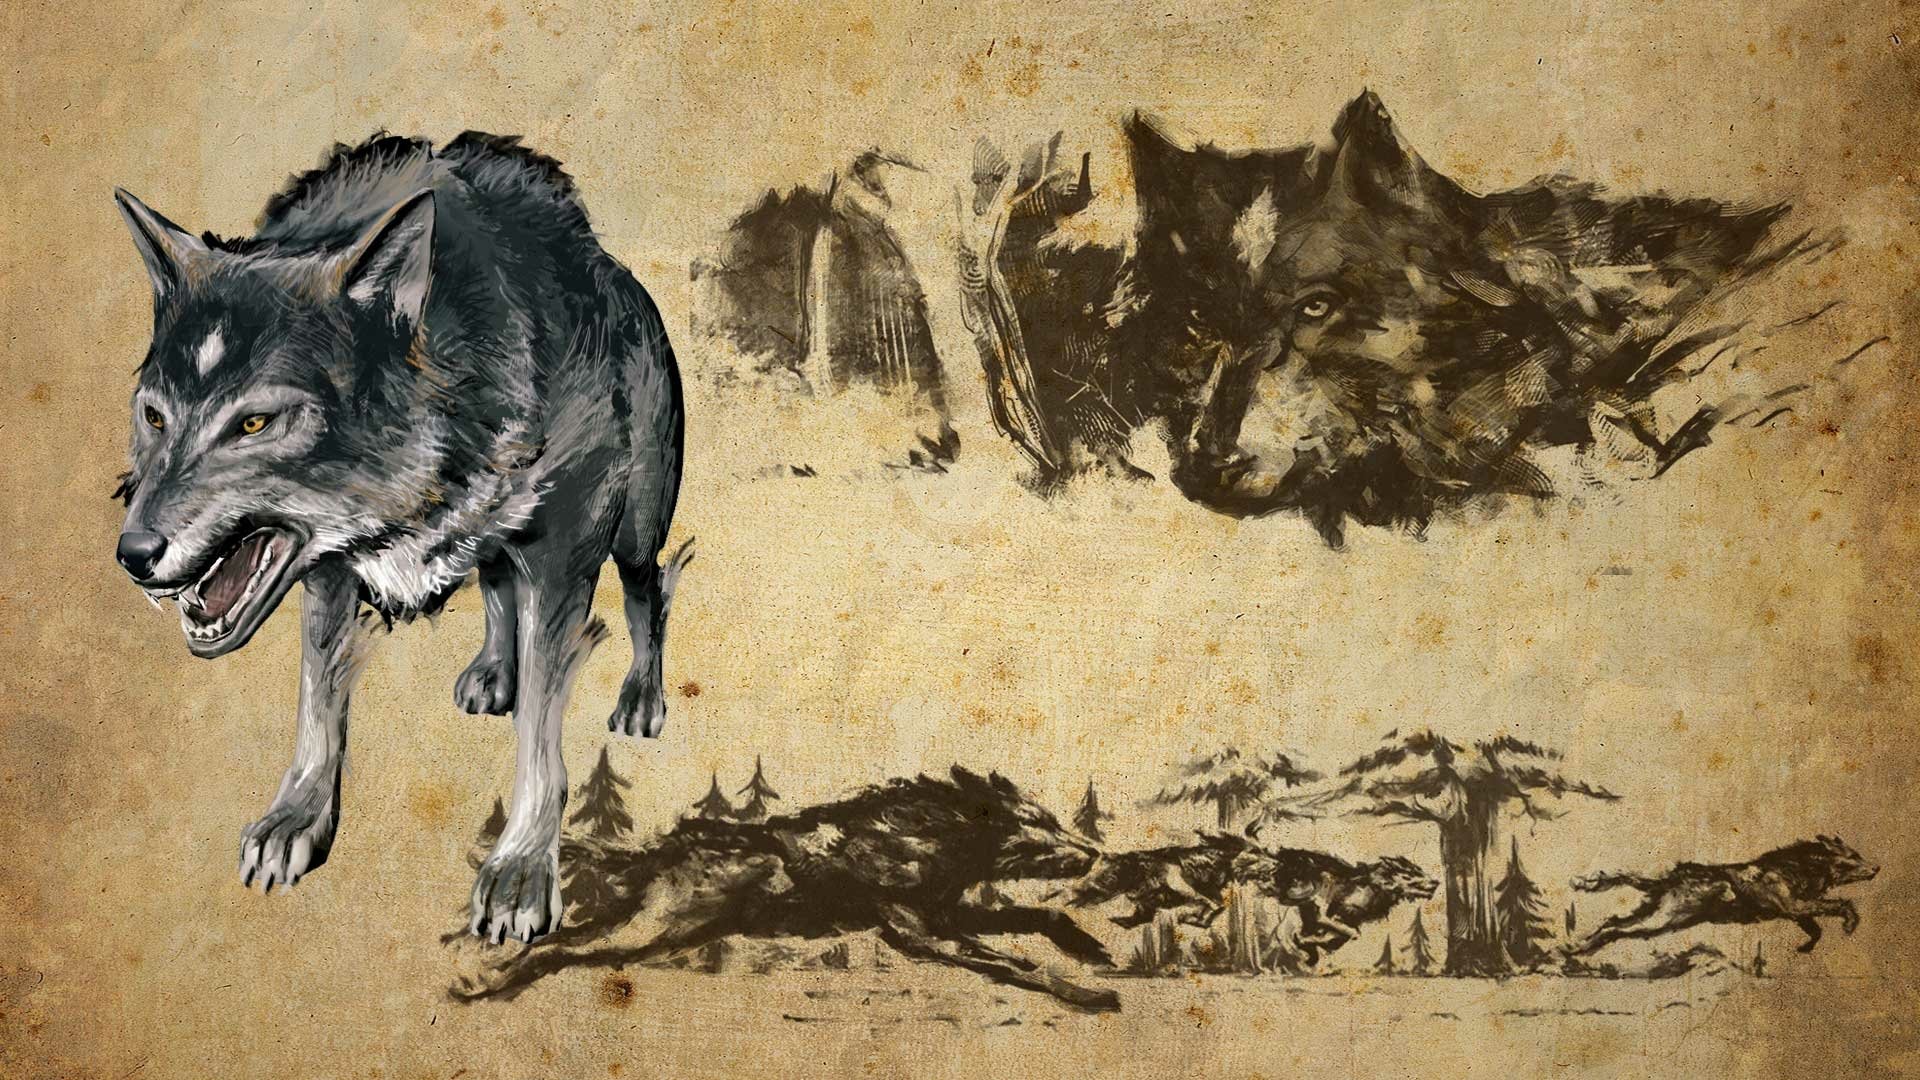 Duncraig wolf 电脑壁纸,桌面背景 | 1920x1080 